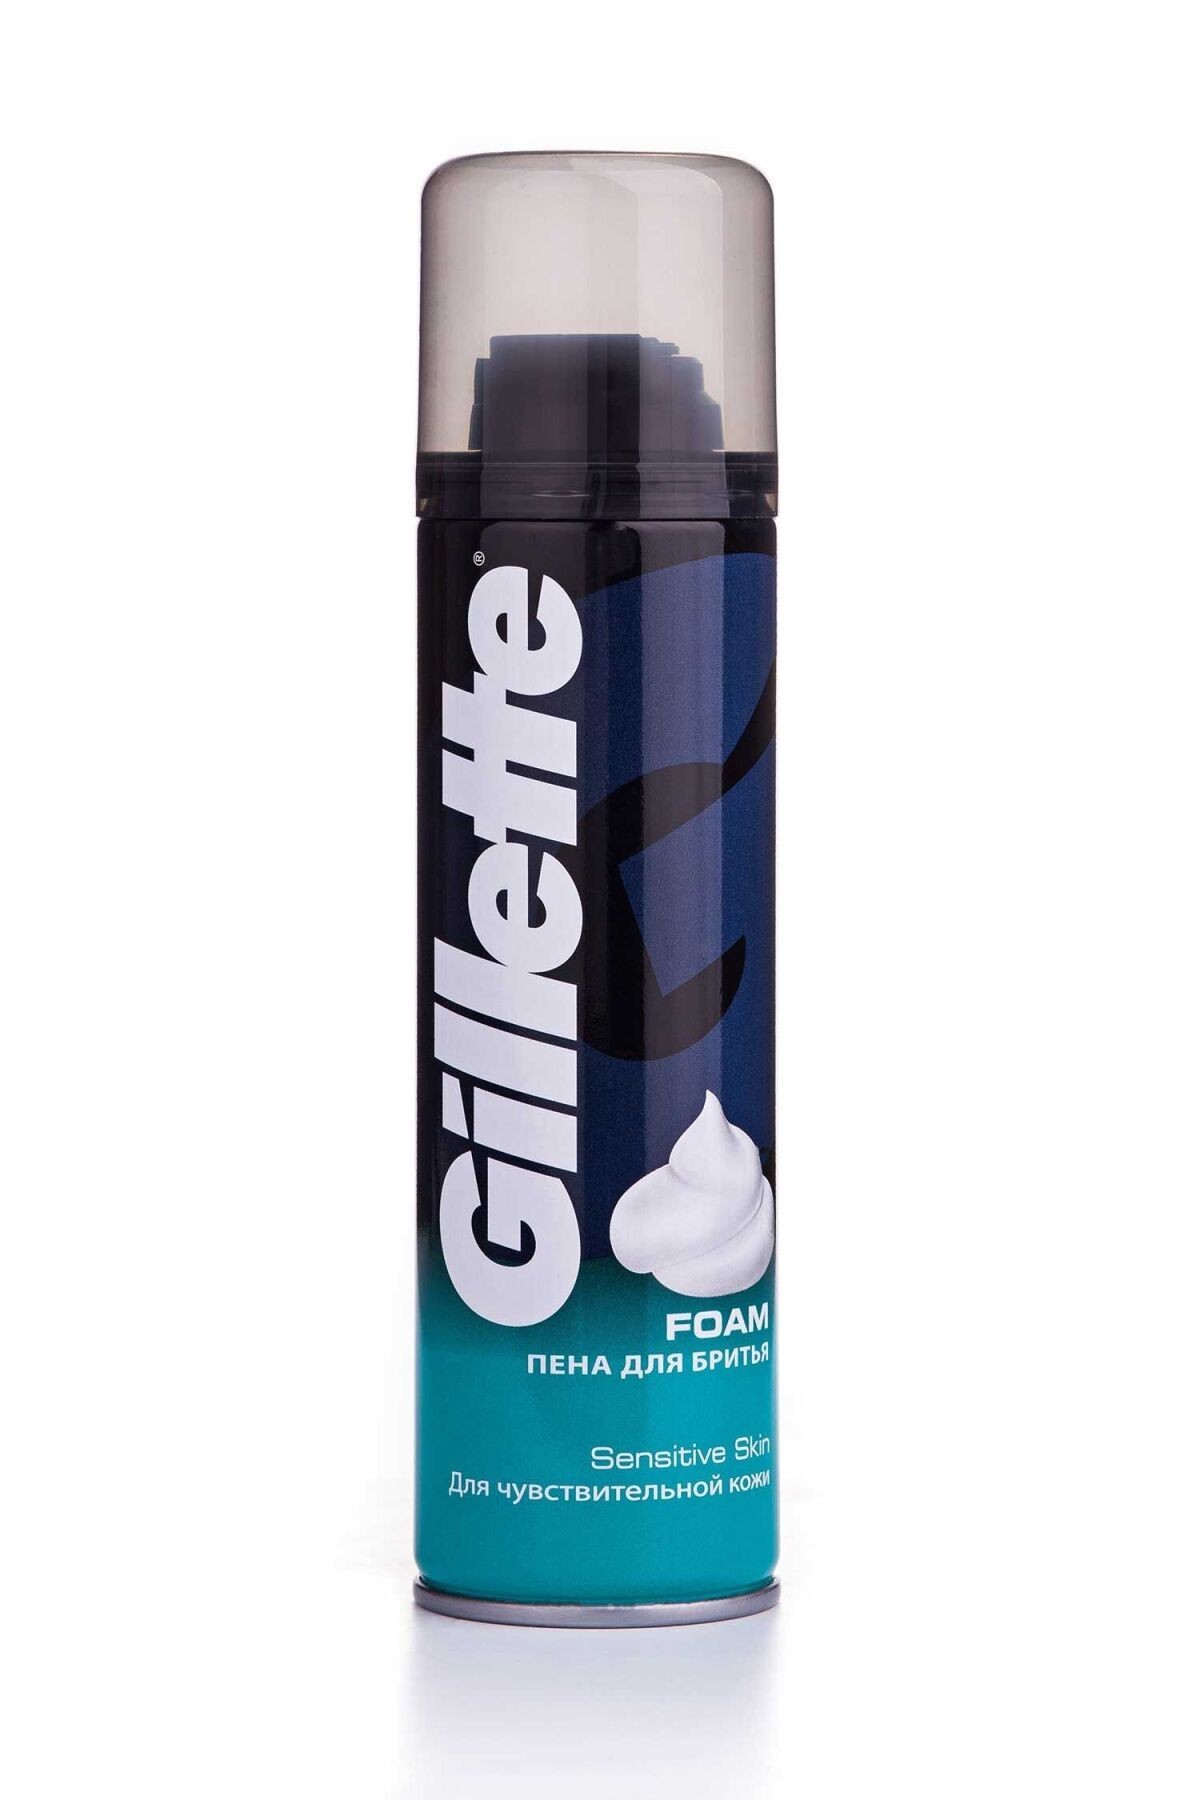 Gillette пена для бритья menthol с ароматом ментола 200мл gillette